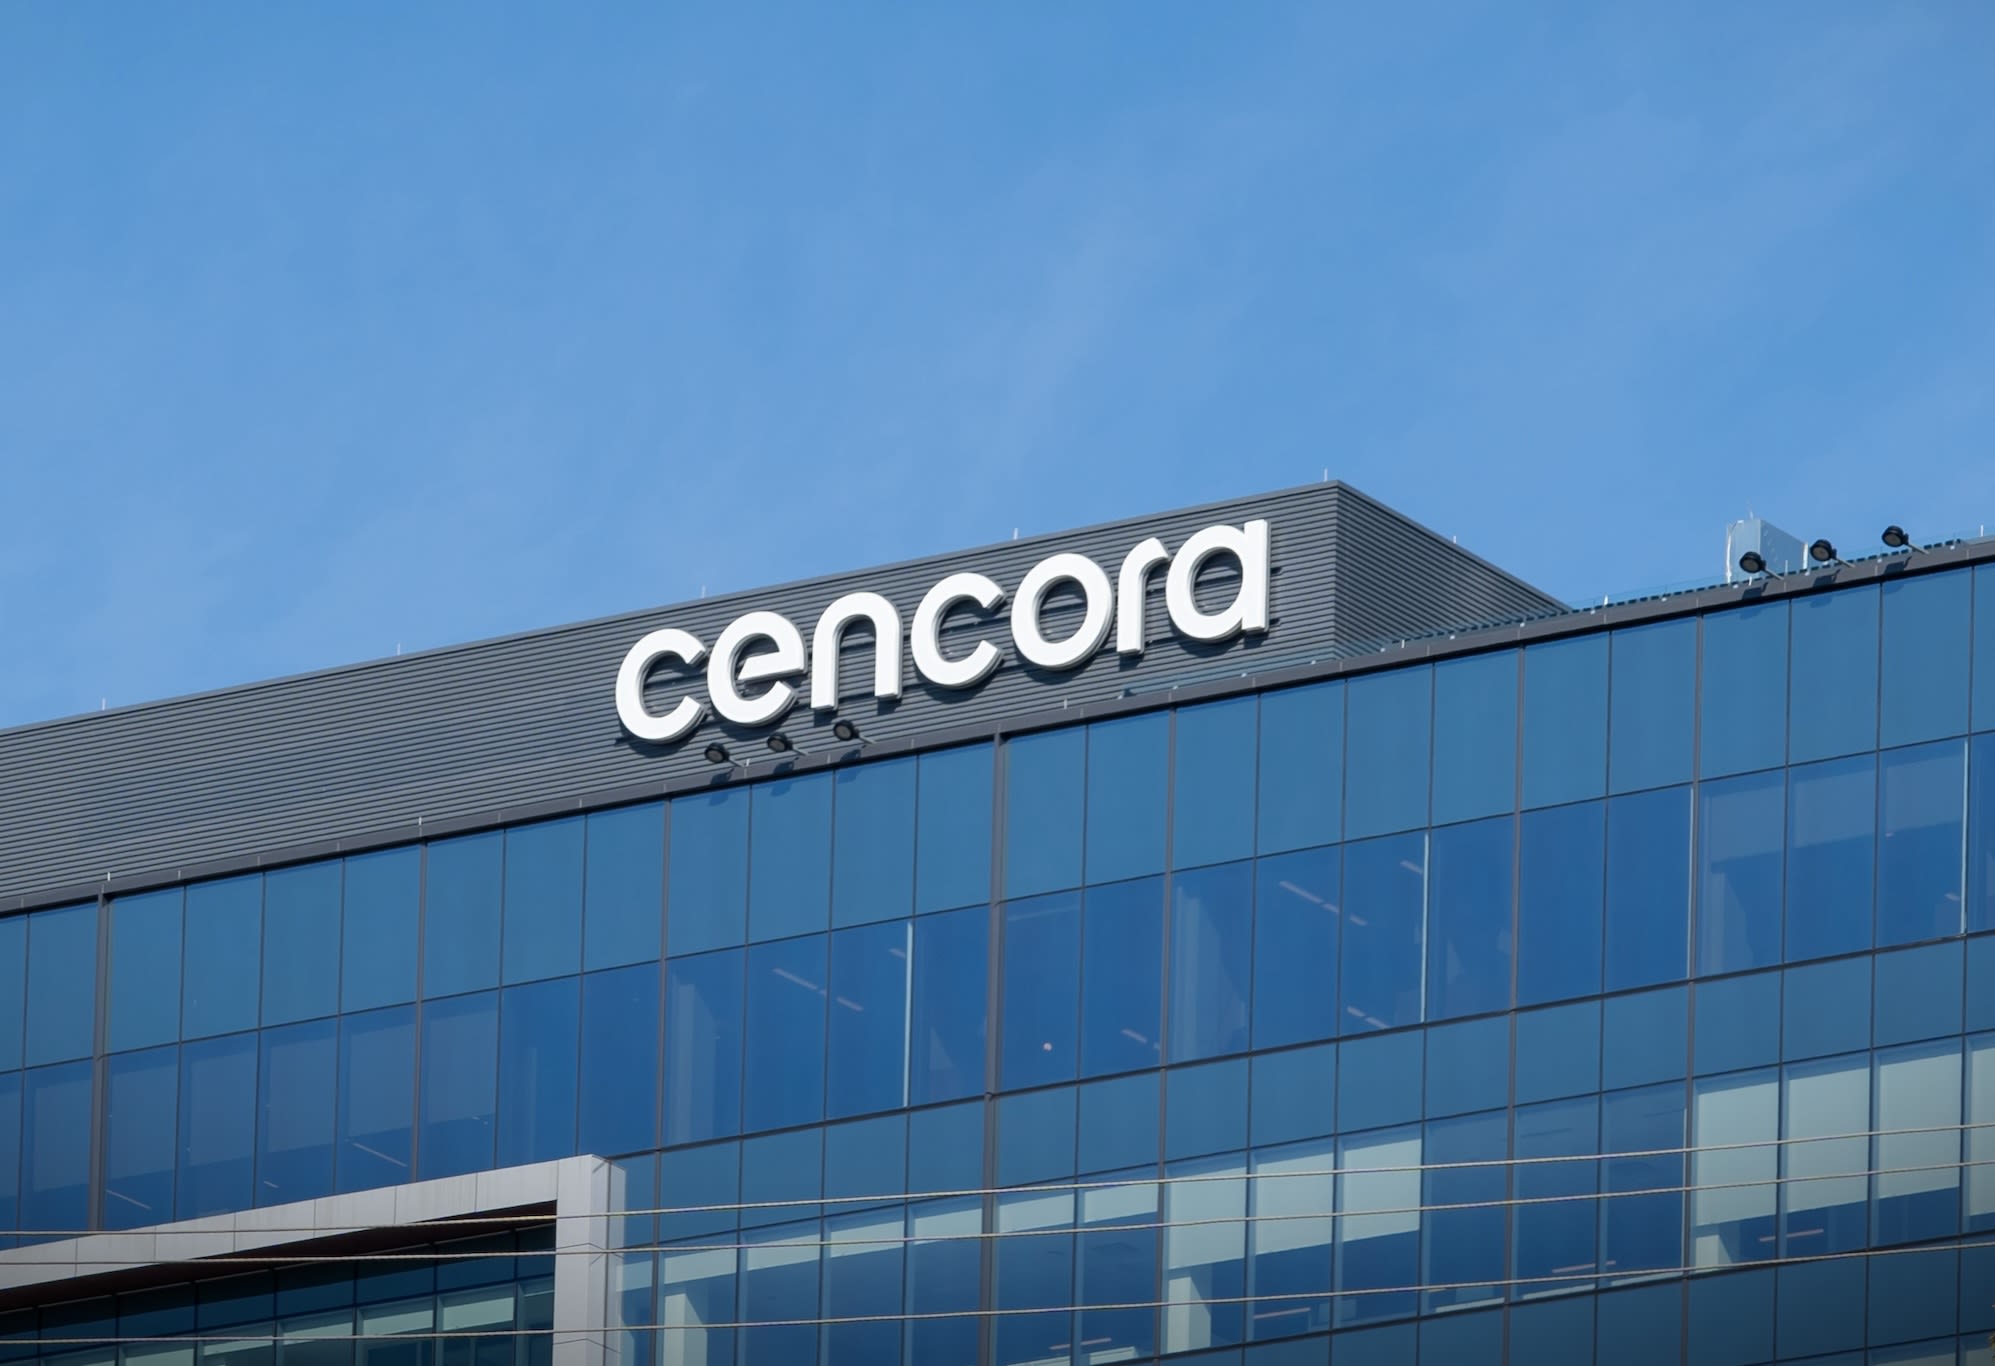 US pharma giant Cencora says Americans' health information stolen in data breach